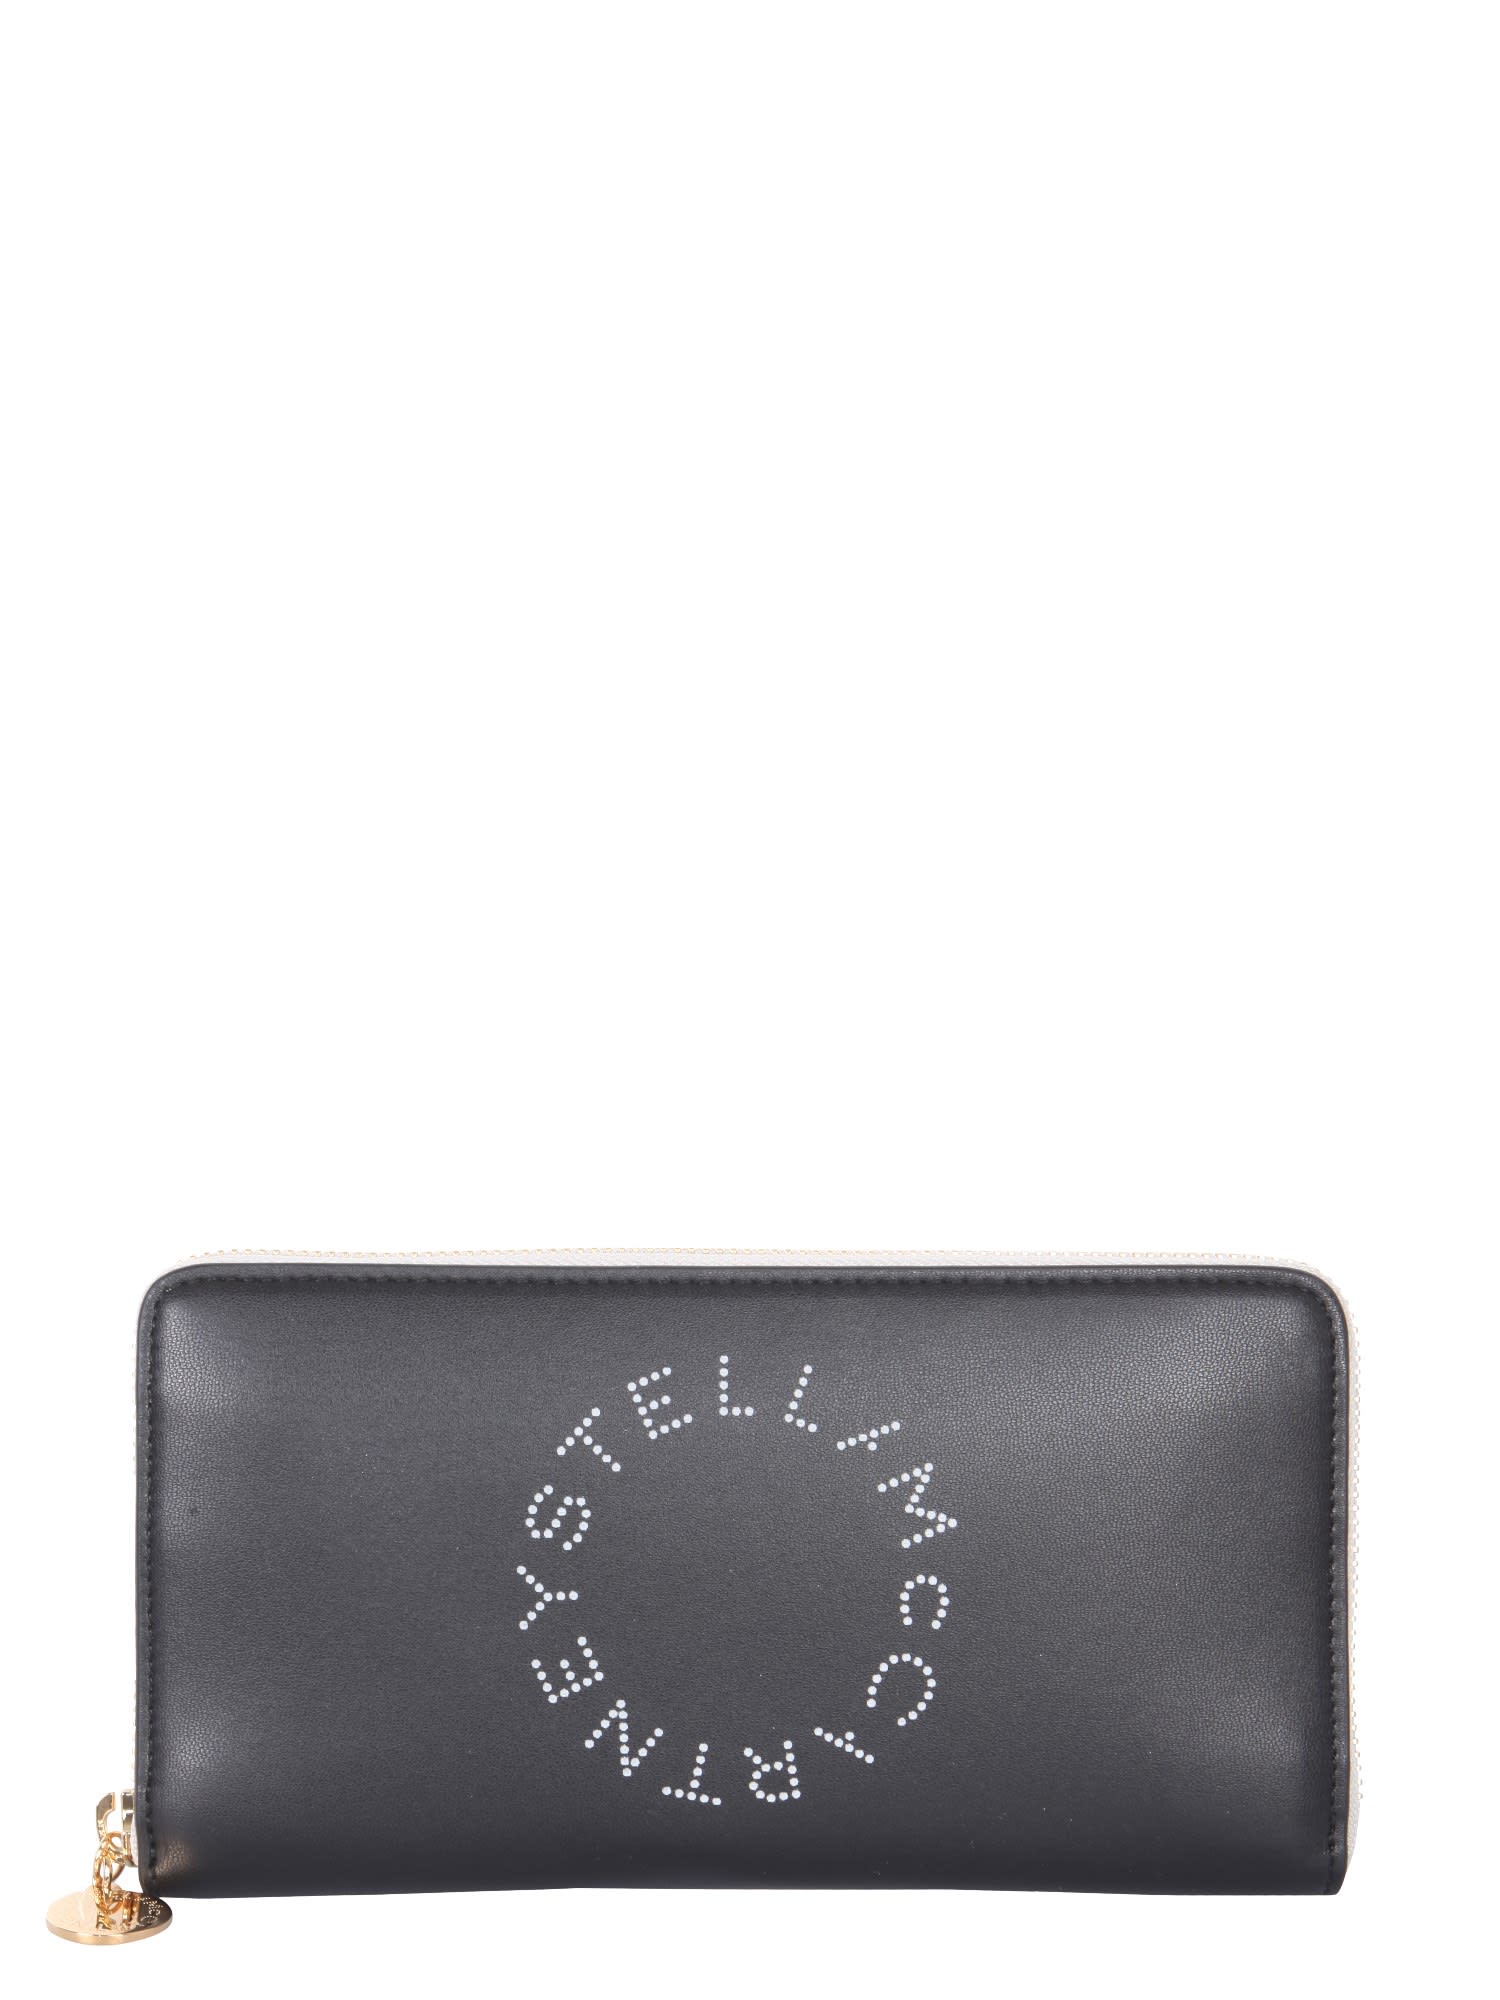 Stella McCartney Continental Wallet